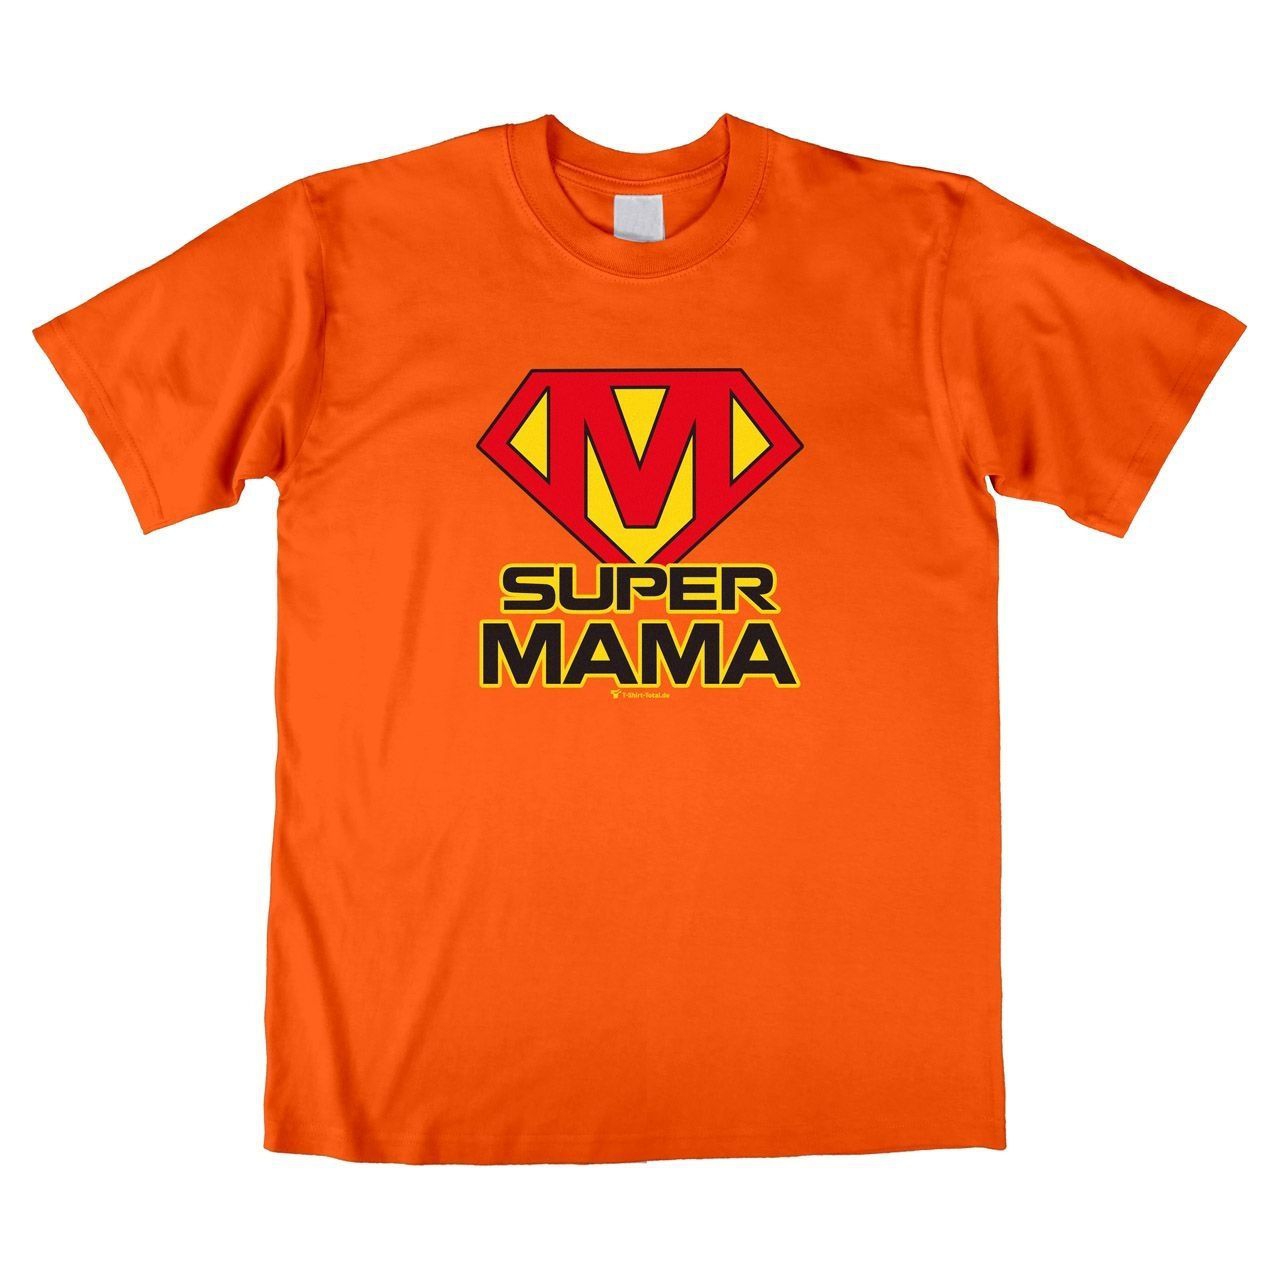 Super Mama Unisex T-Shirt orange Small